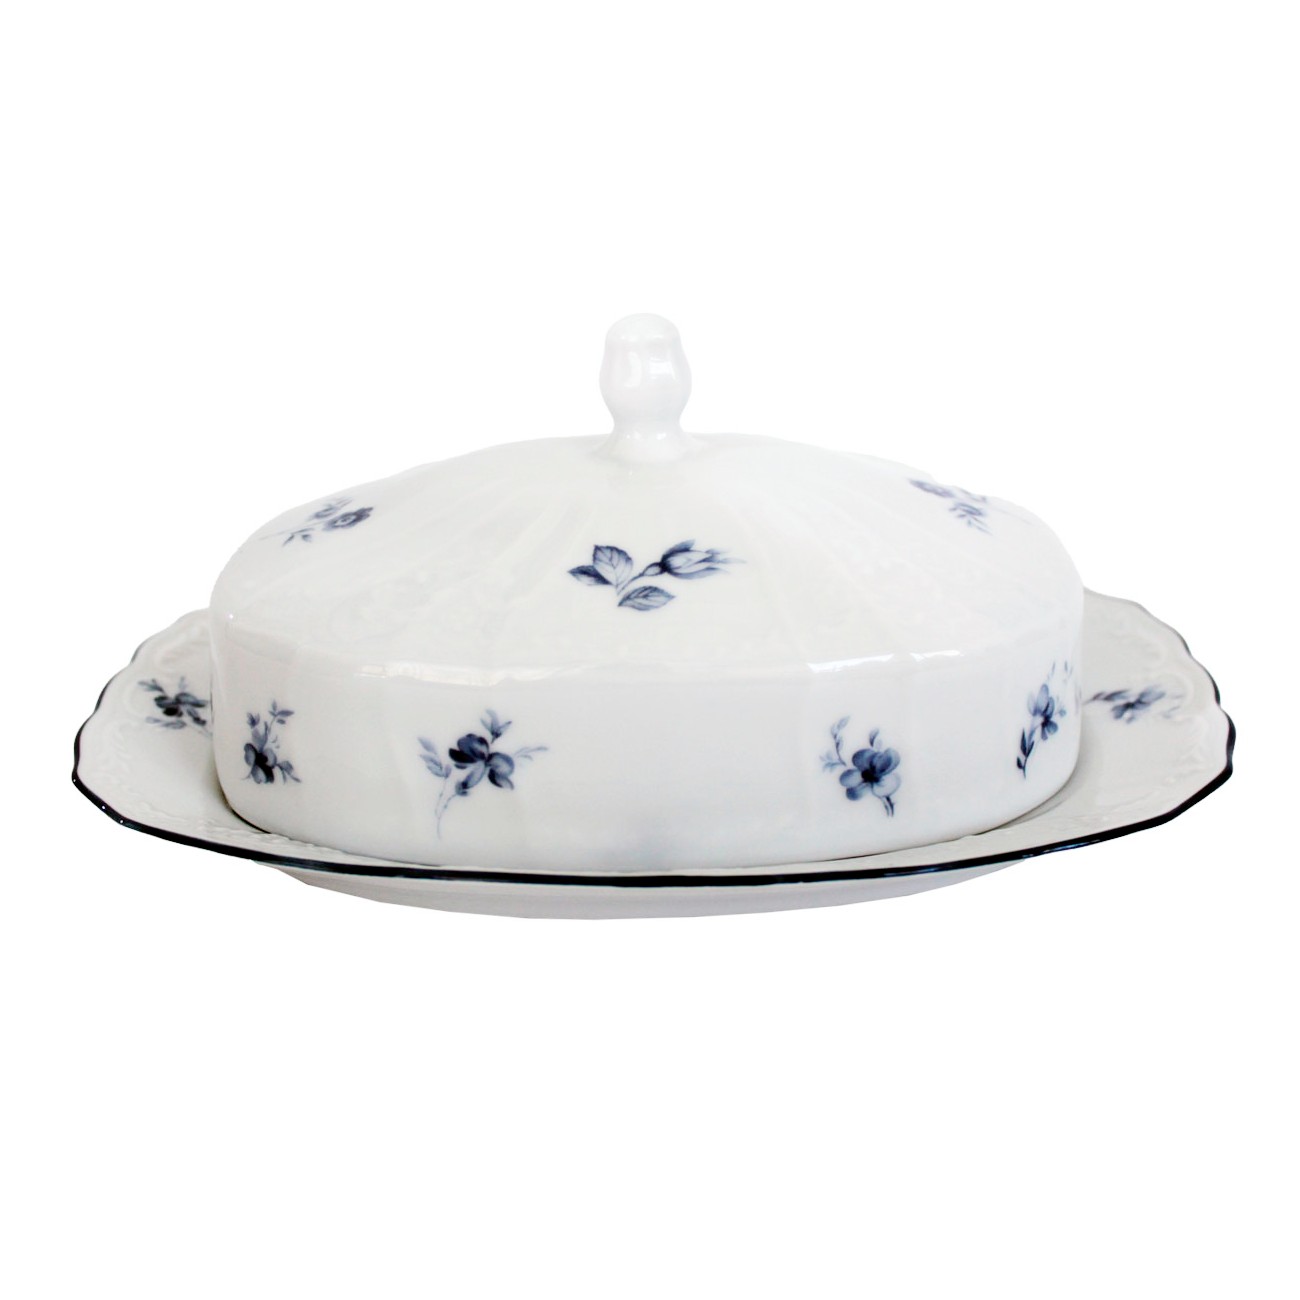 Масленка Thun 1794 Bernadotte Синие мелкие цветы тарелка десертная thun 1794 bernadotte синие мелкие ы 19 см